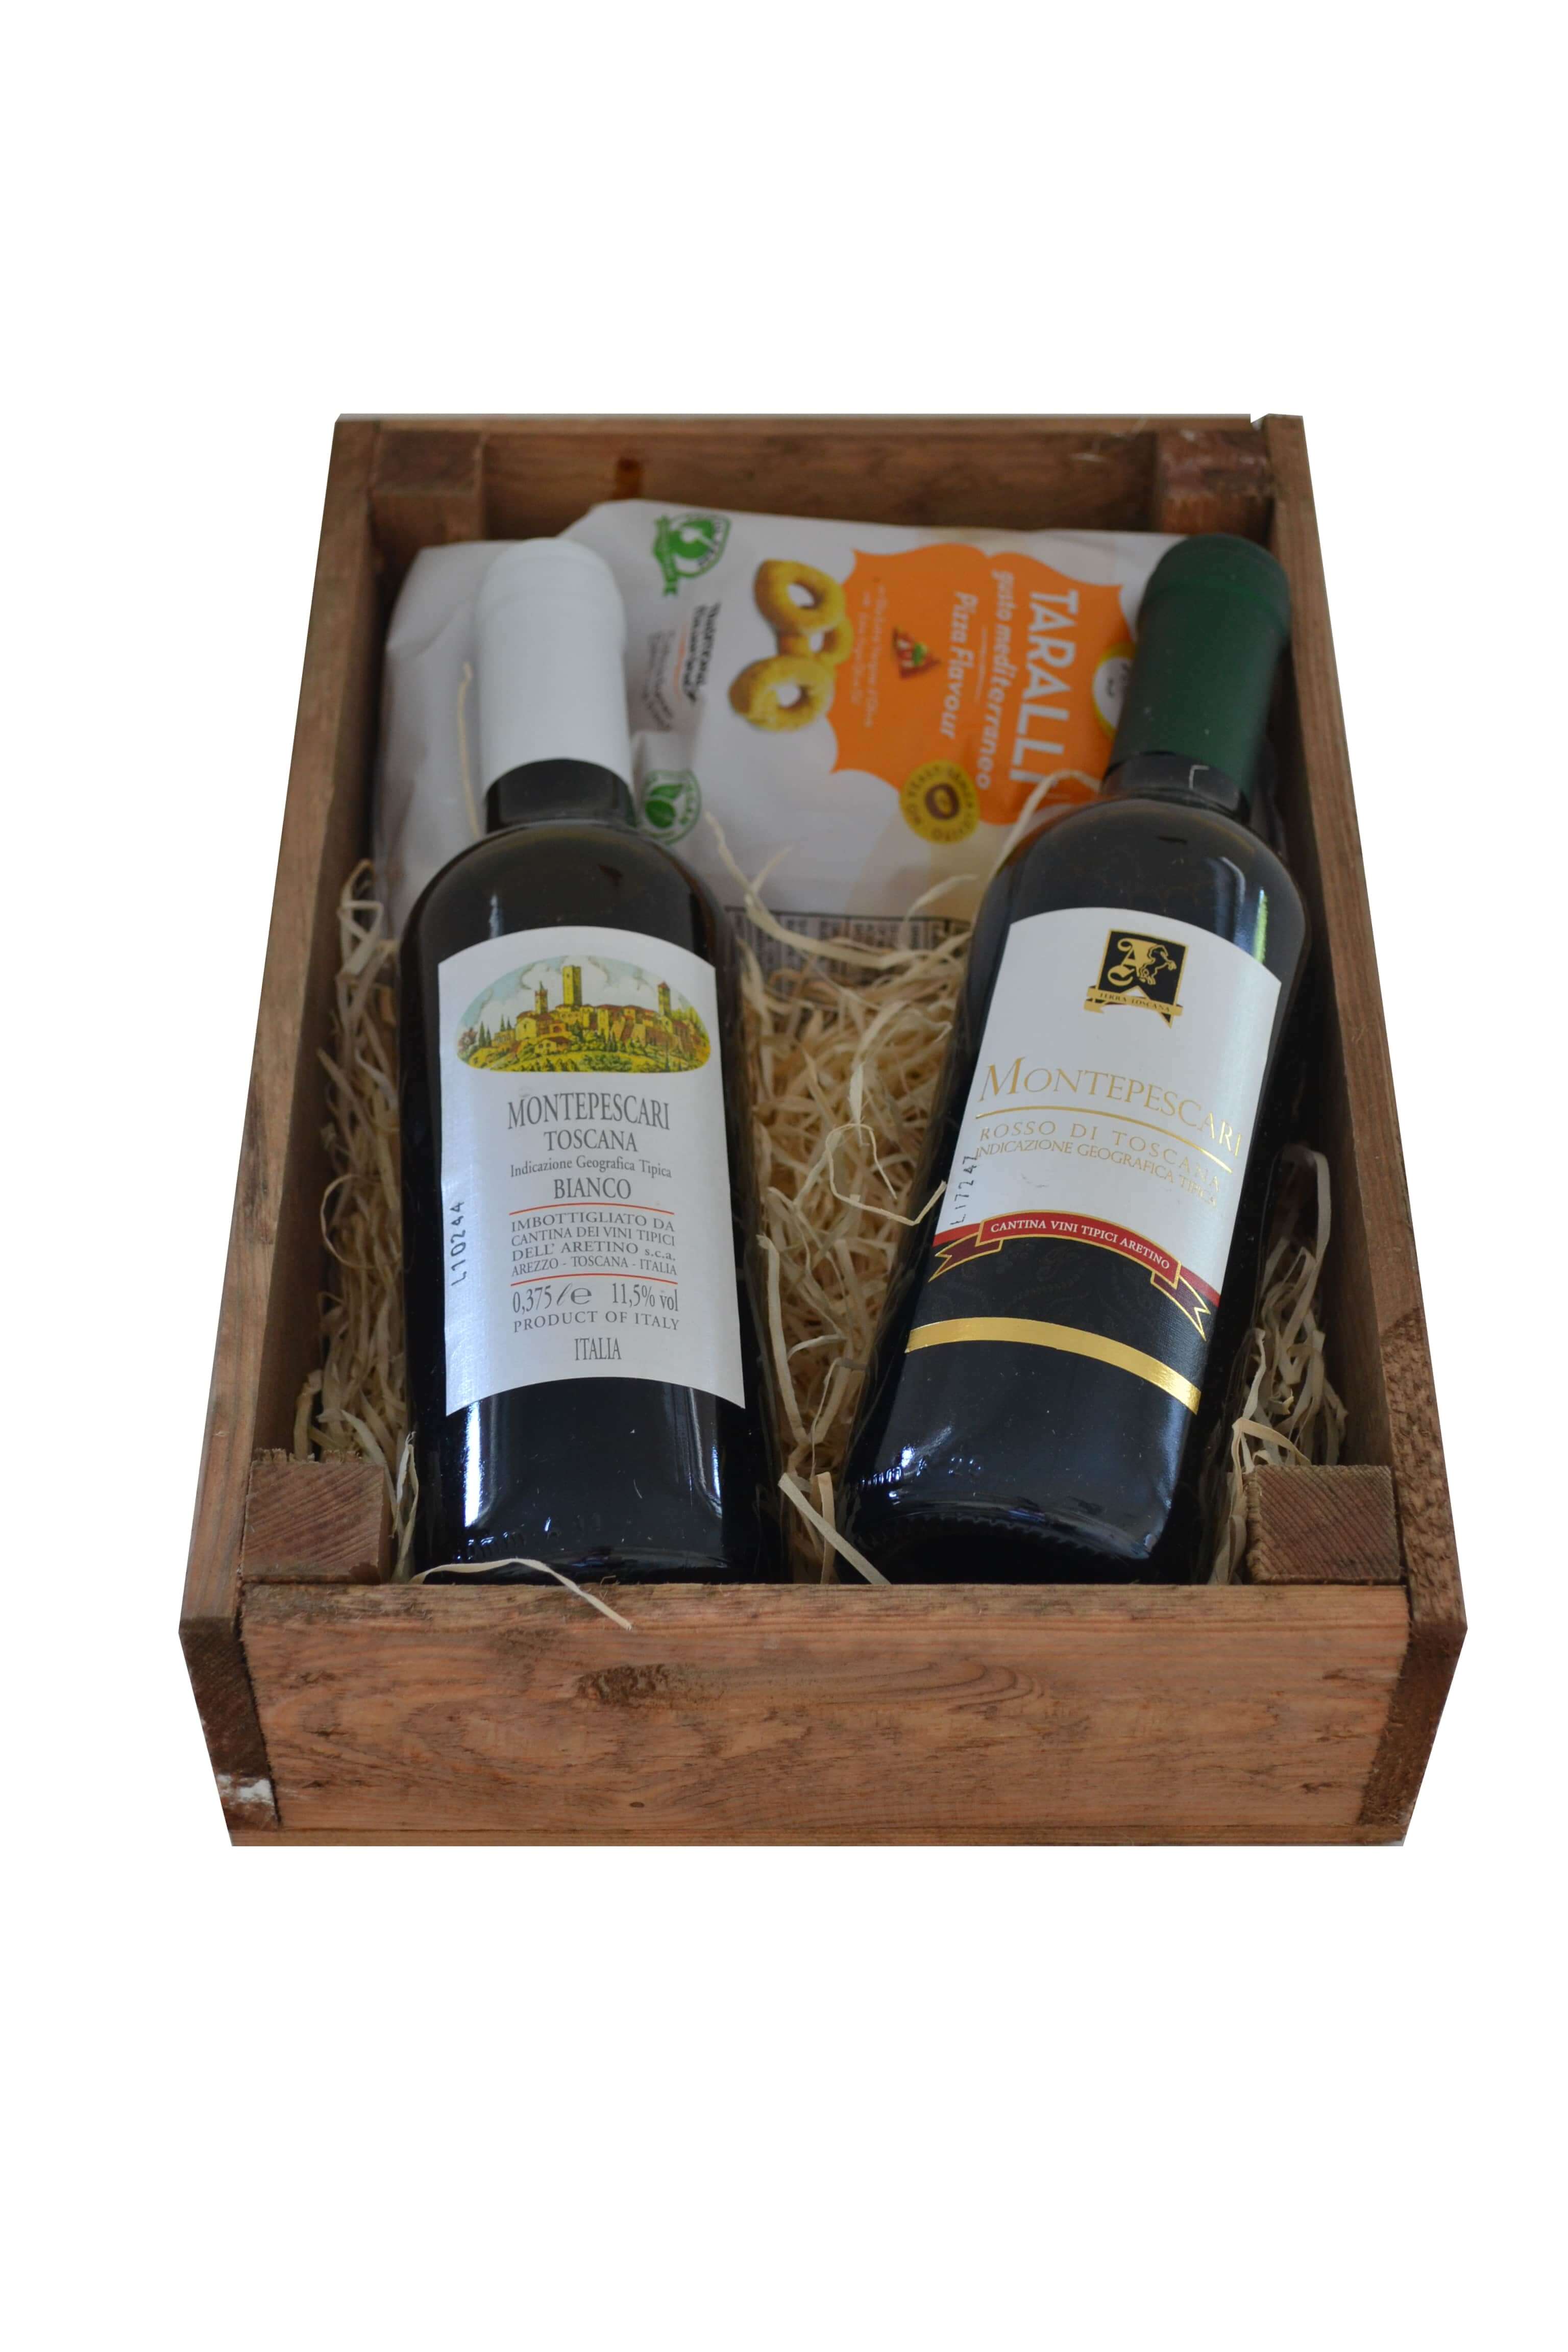 Vintage wooden box wine